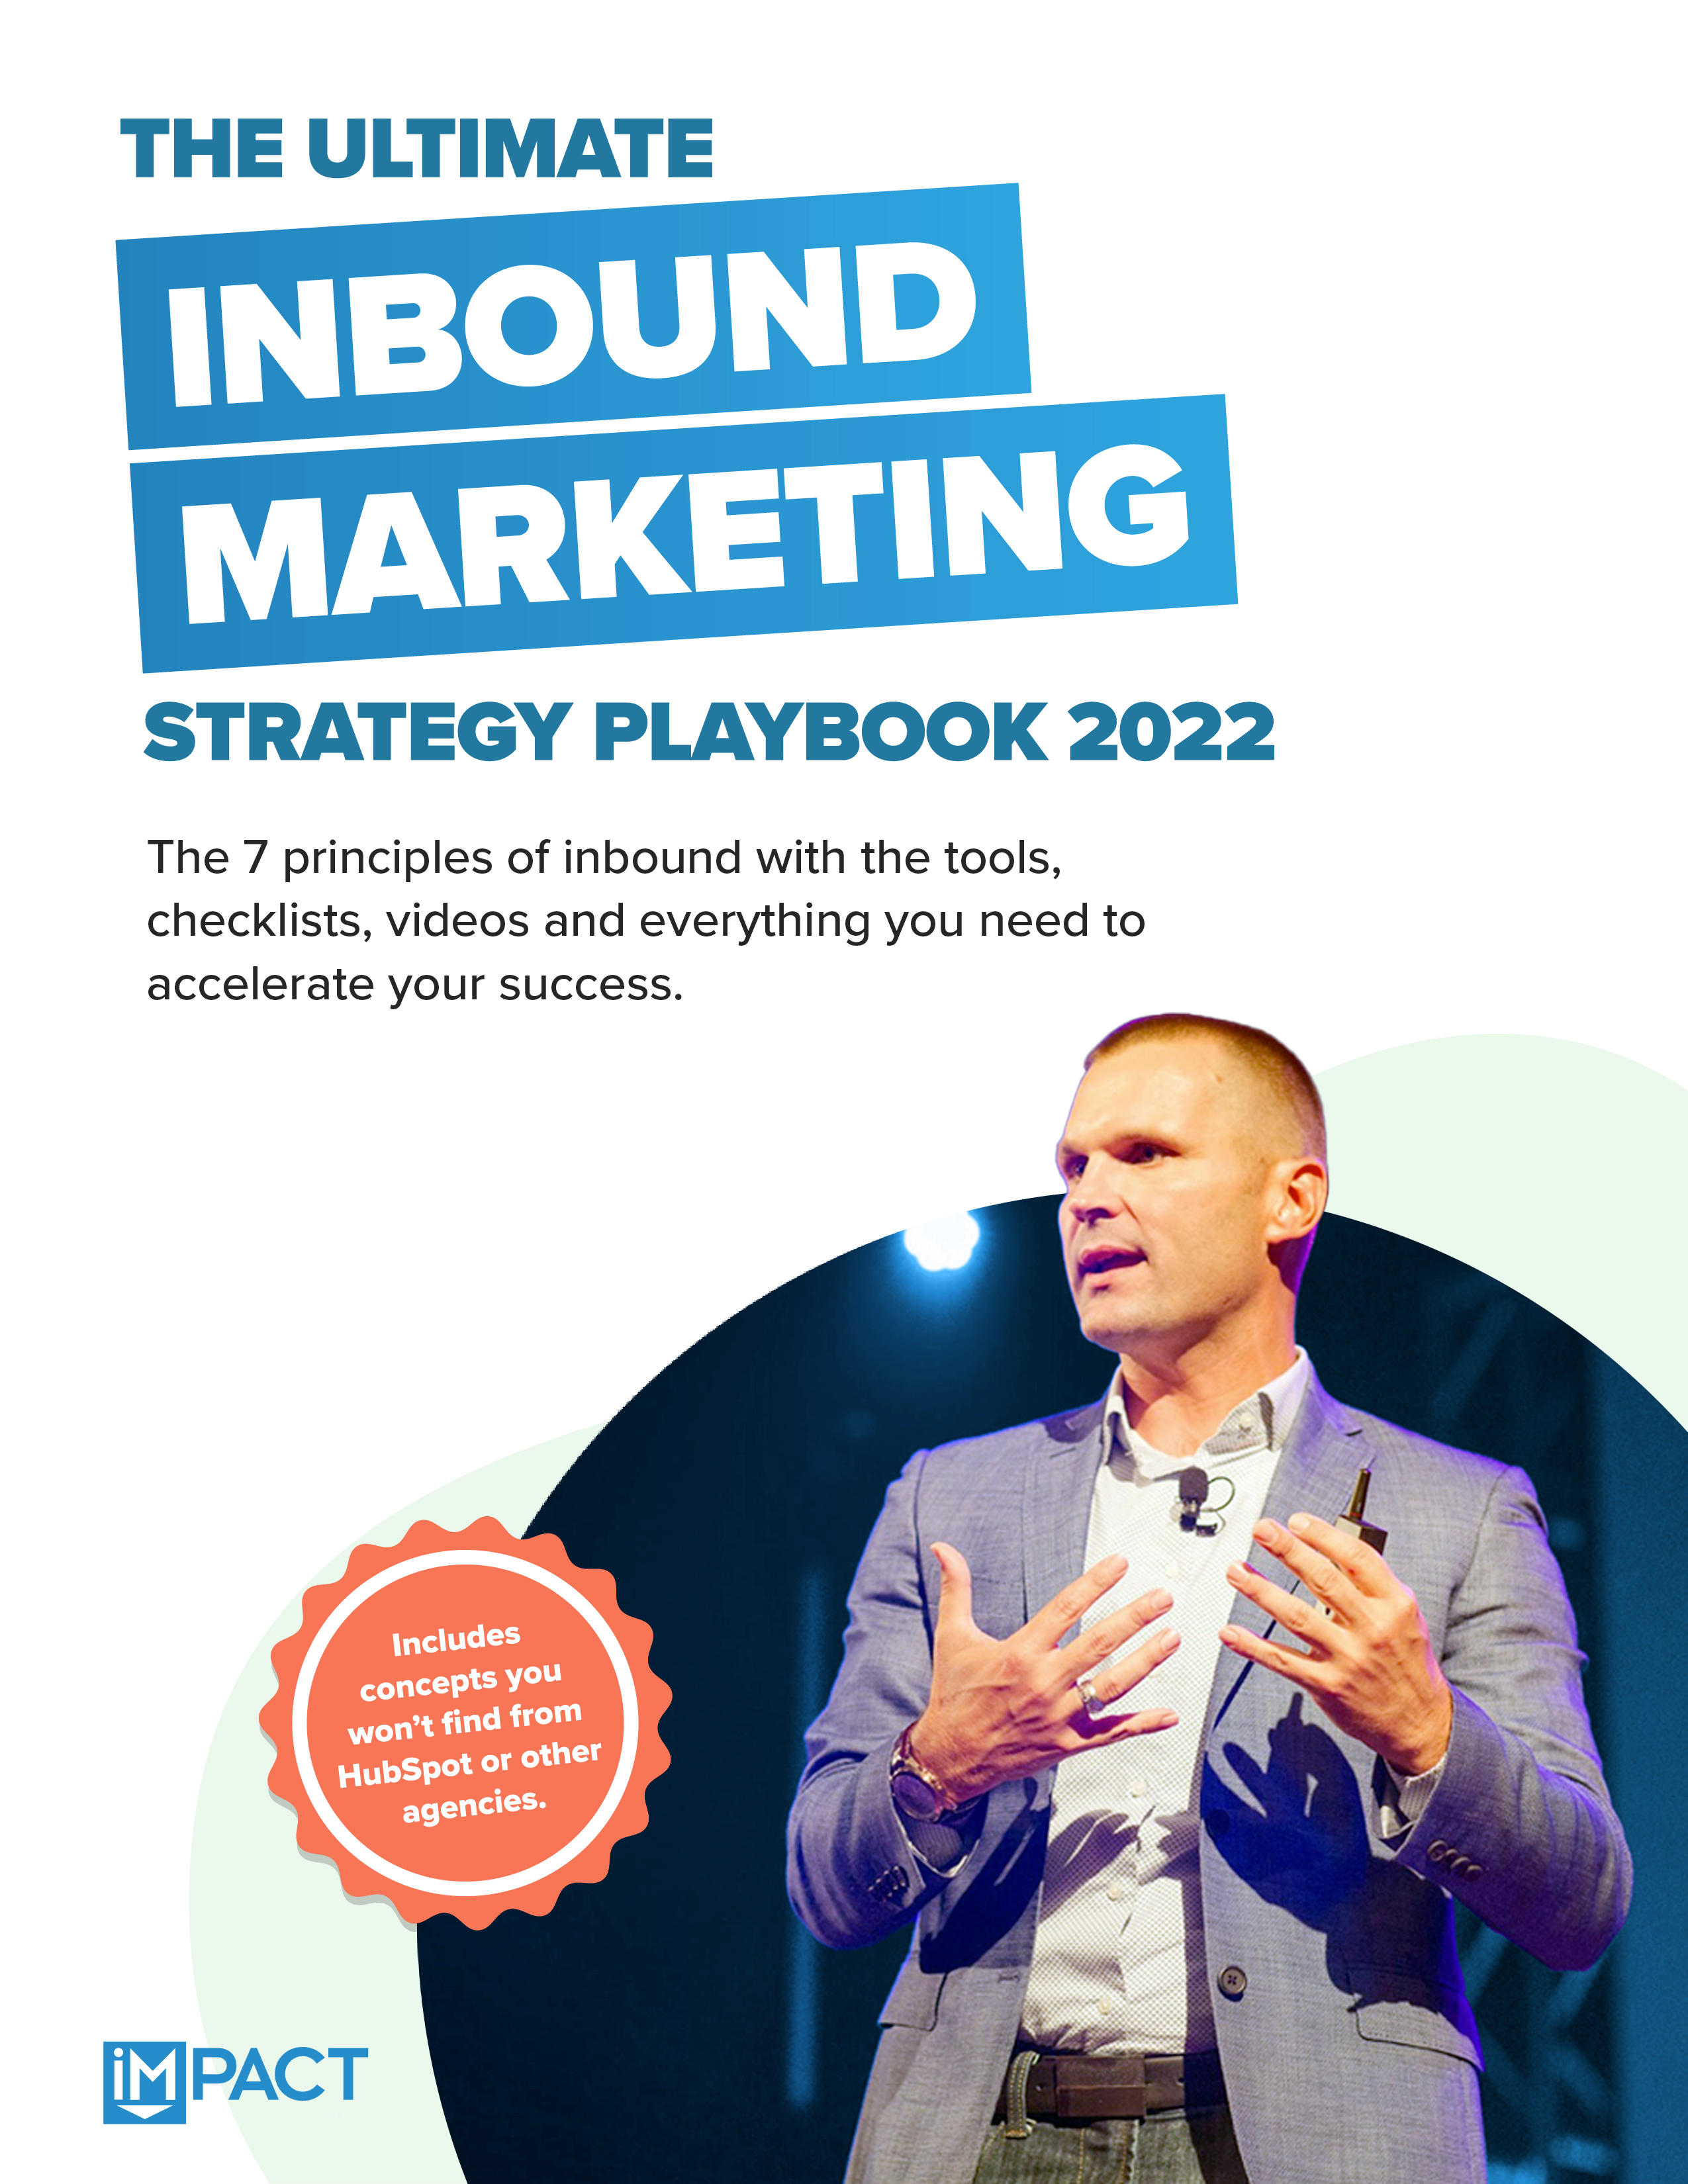 The Inbound Marketing Strategy Playbook